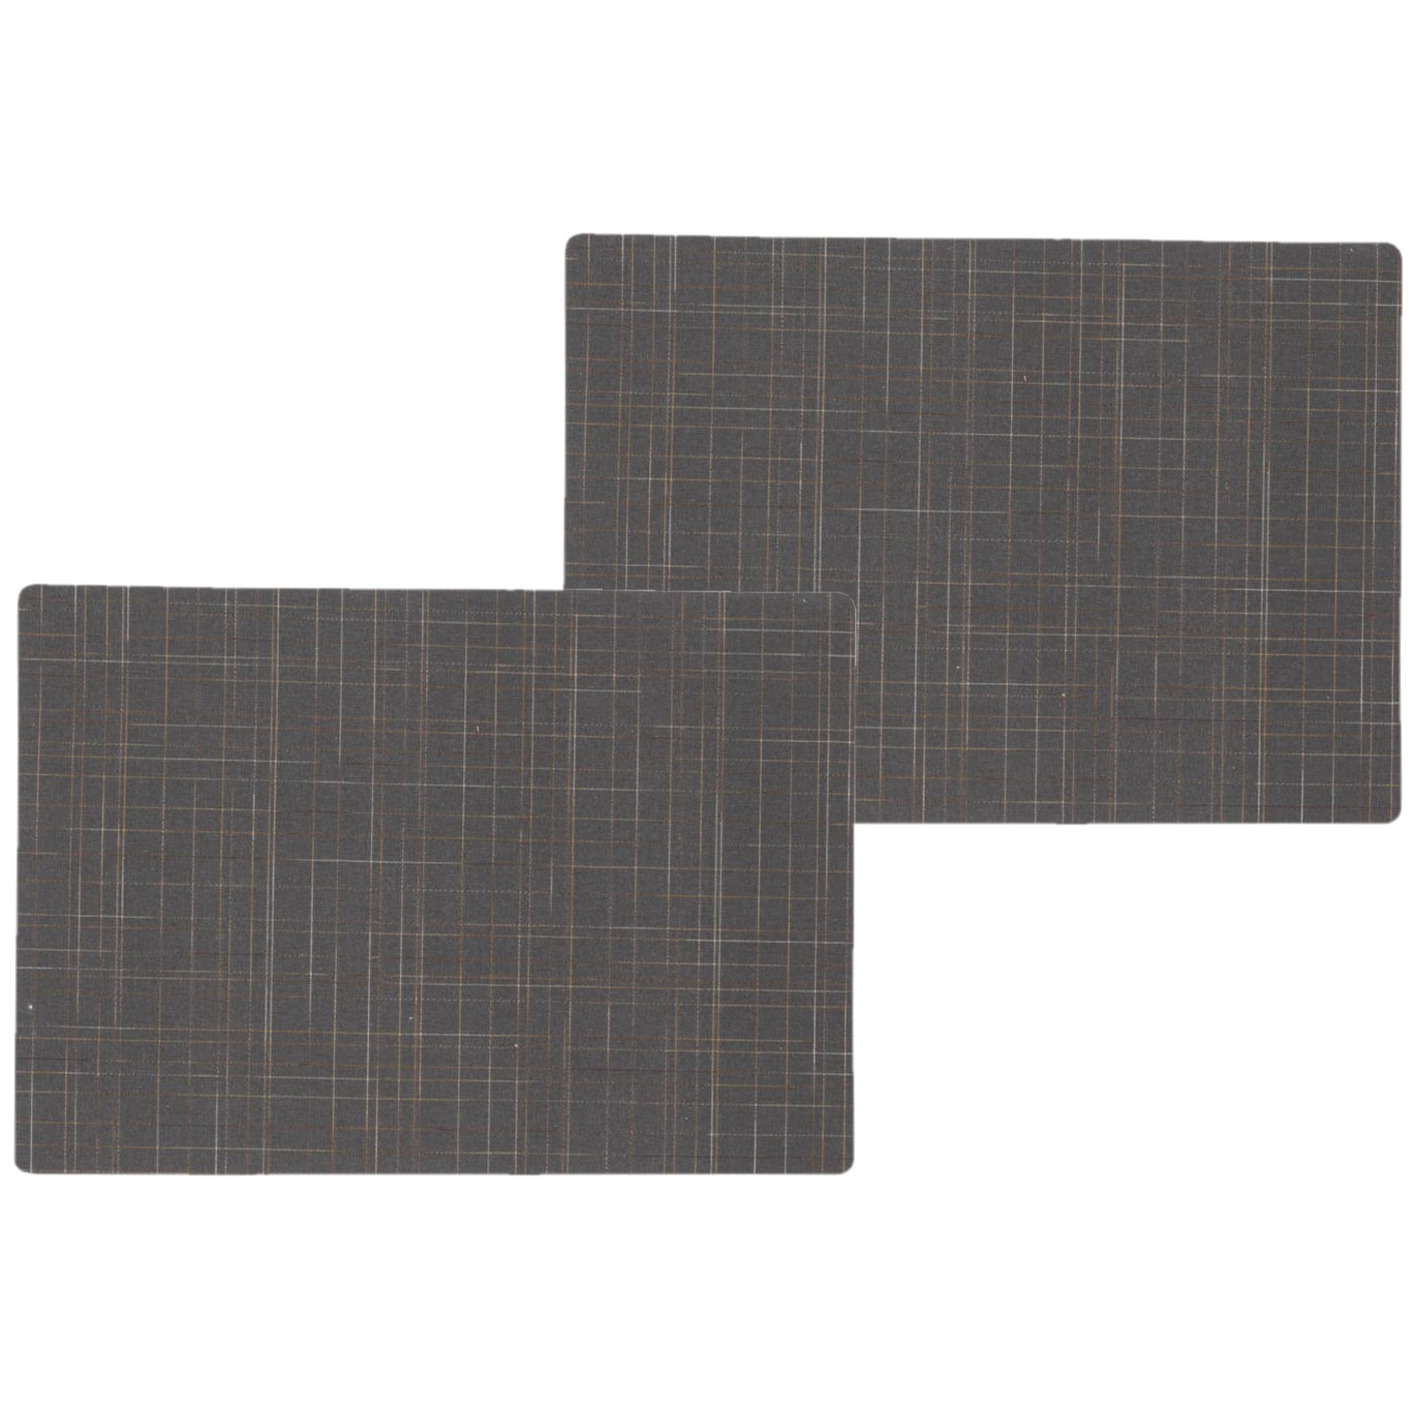 Wicotex 12x stuks stevige luxe Tafel placemats Liso grijs 30 x 43 cm -